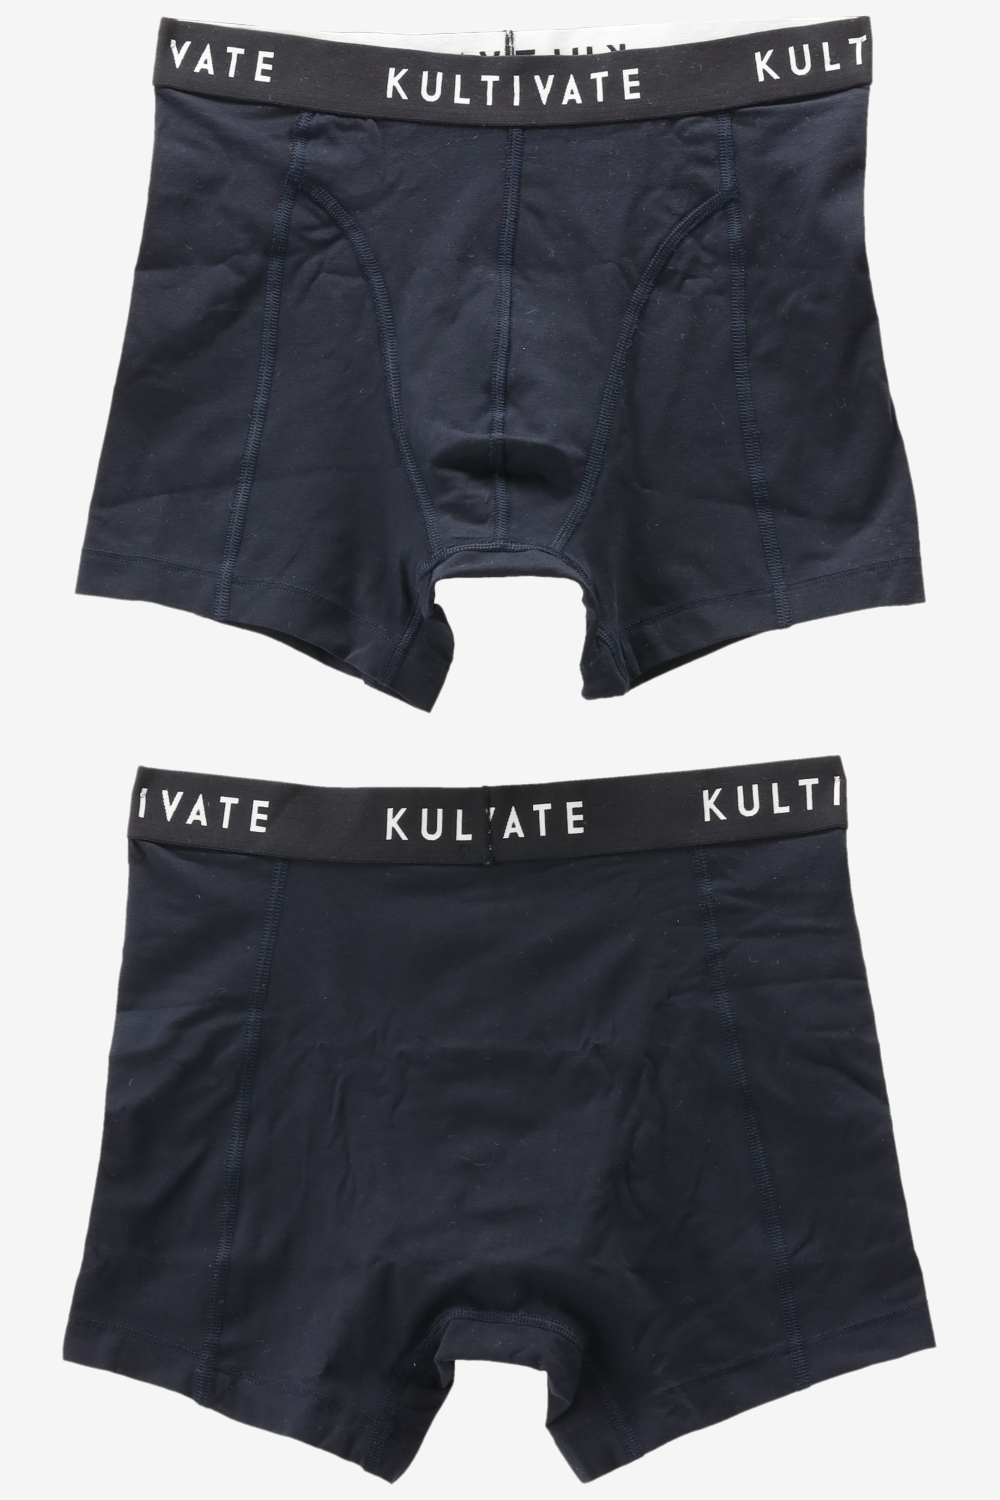 Kultivate Underwear 